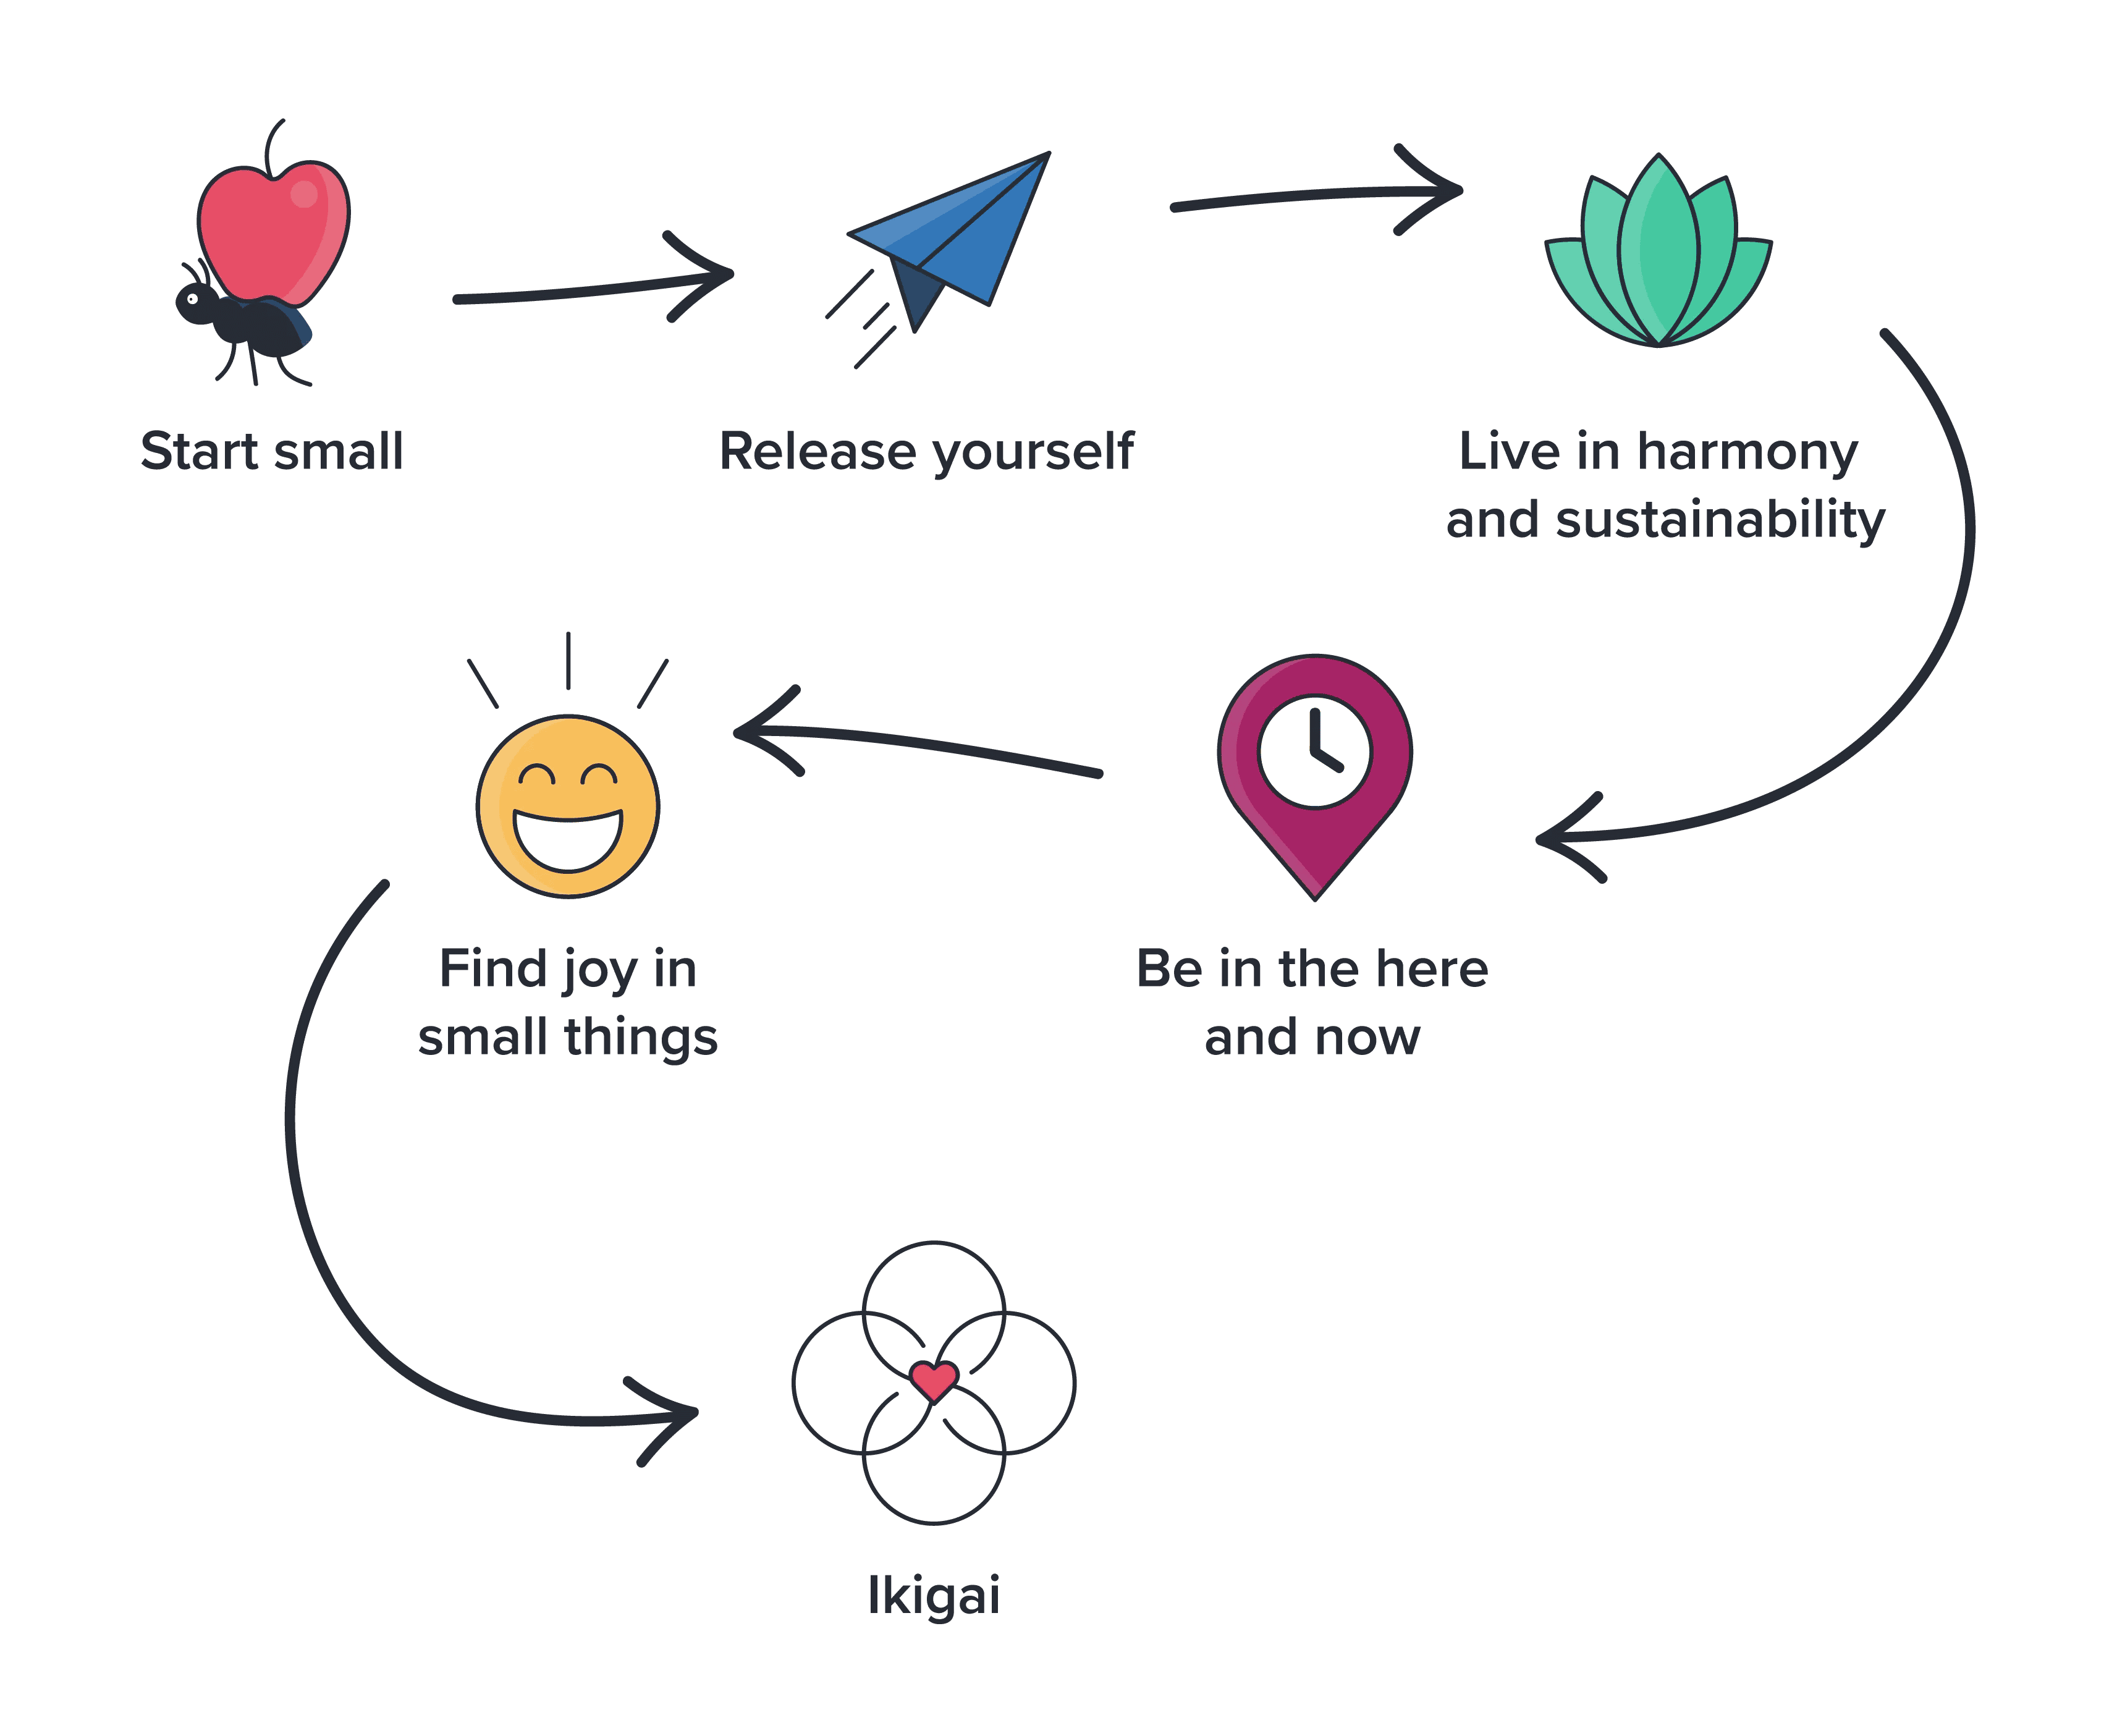 Ken Mogi identifies five principles of Ikigai in a flow chart